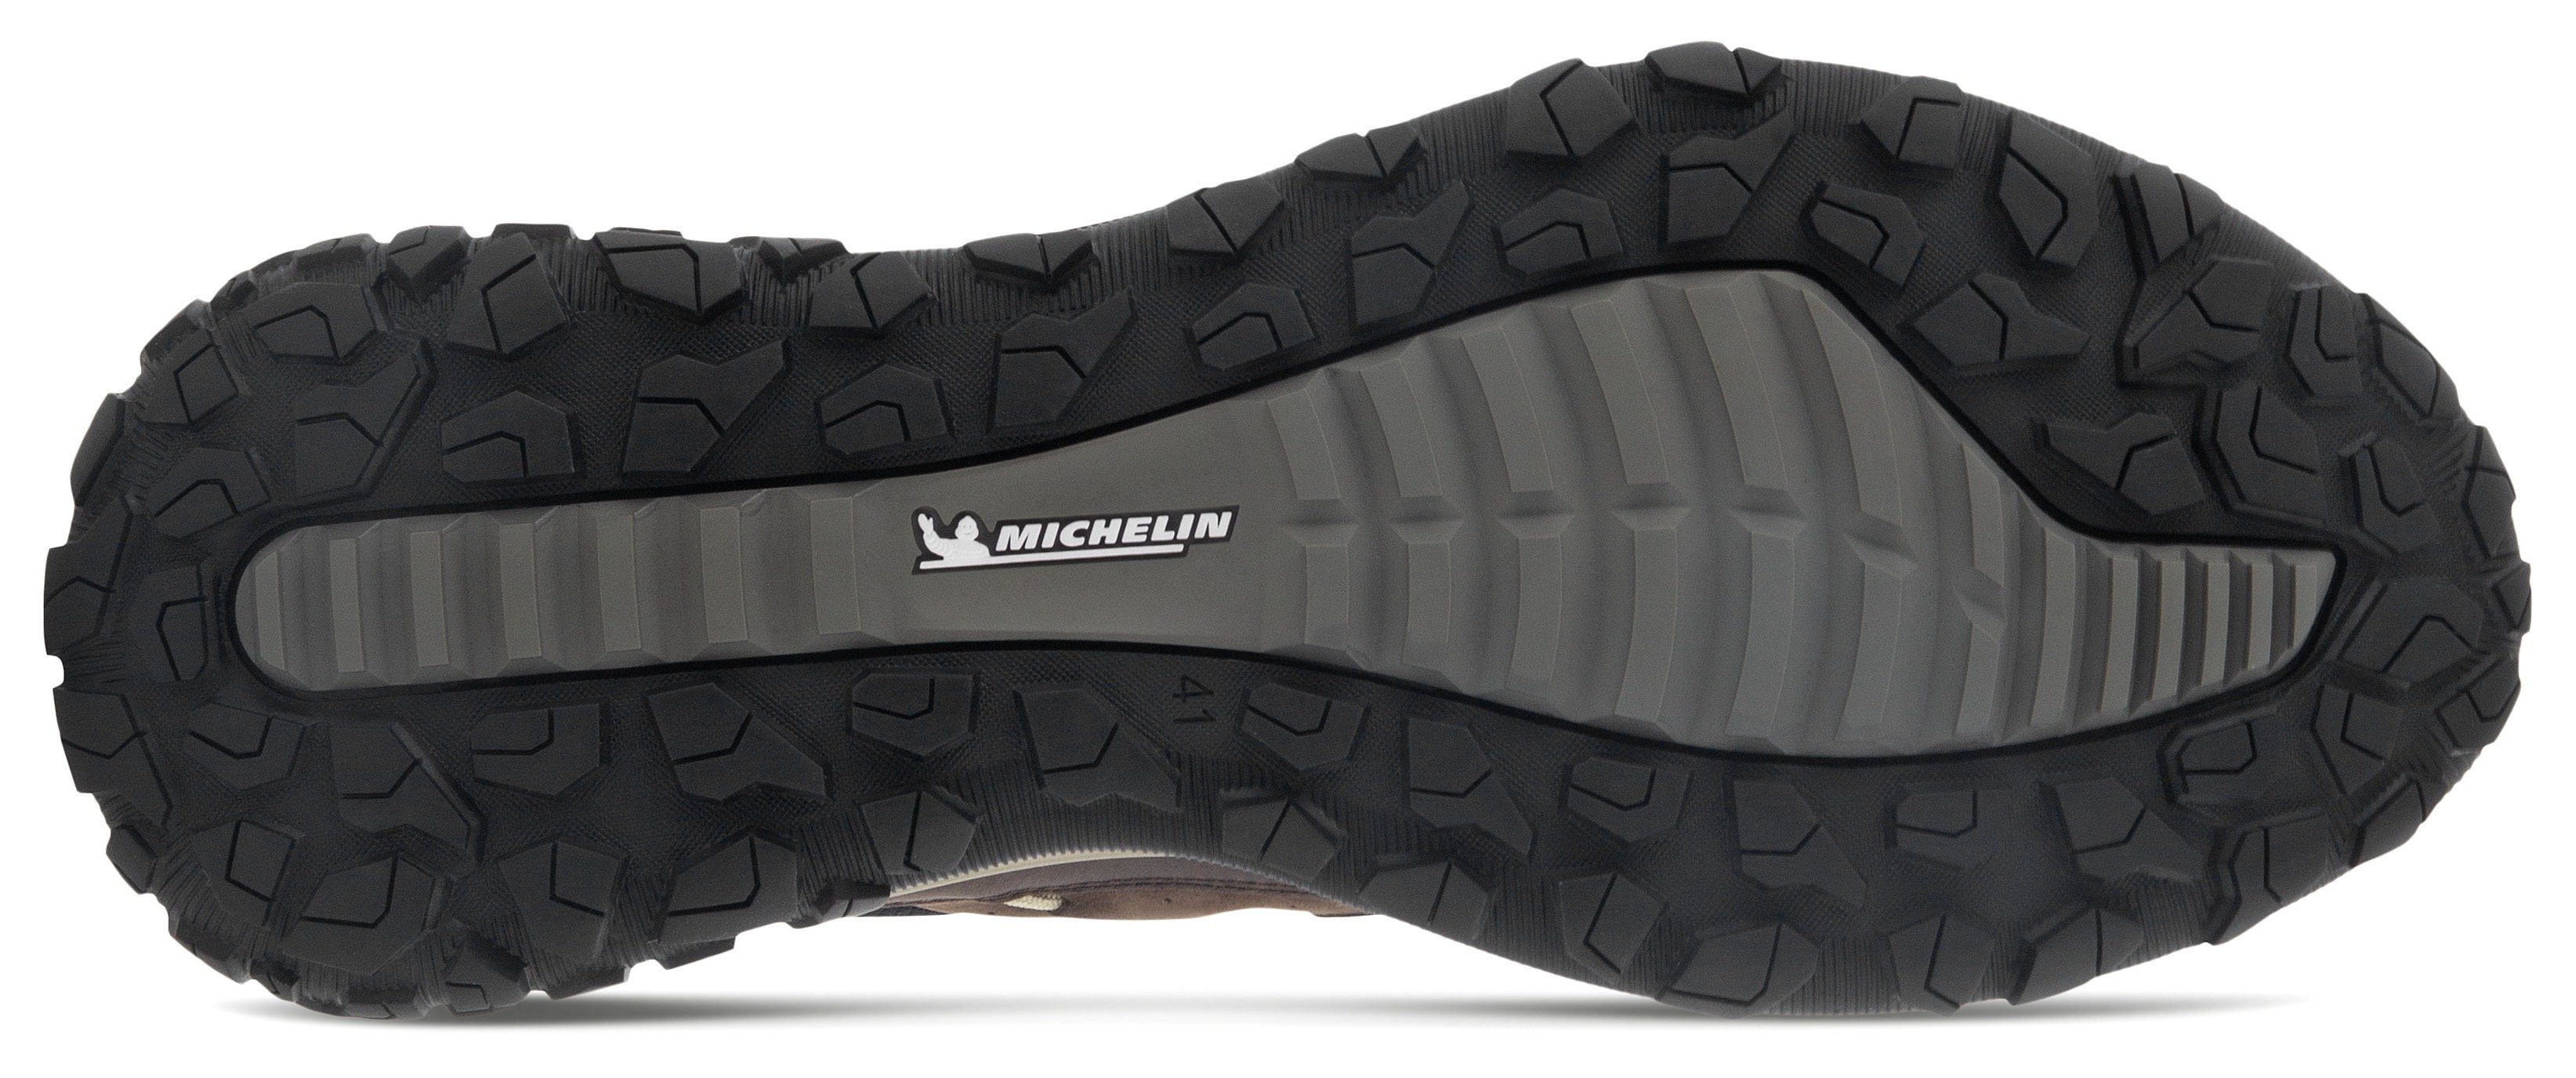 Sneaker Ecco profilierter mit dunkelbraun Michelin-Laufsohle M ULT-TRN